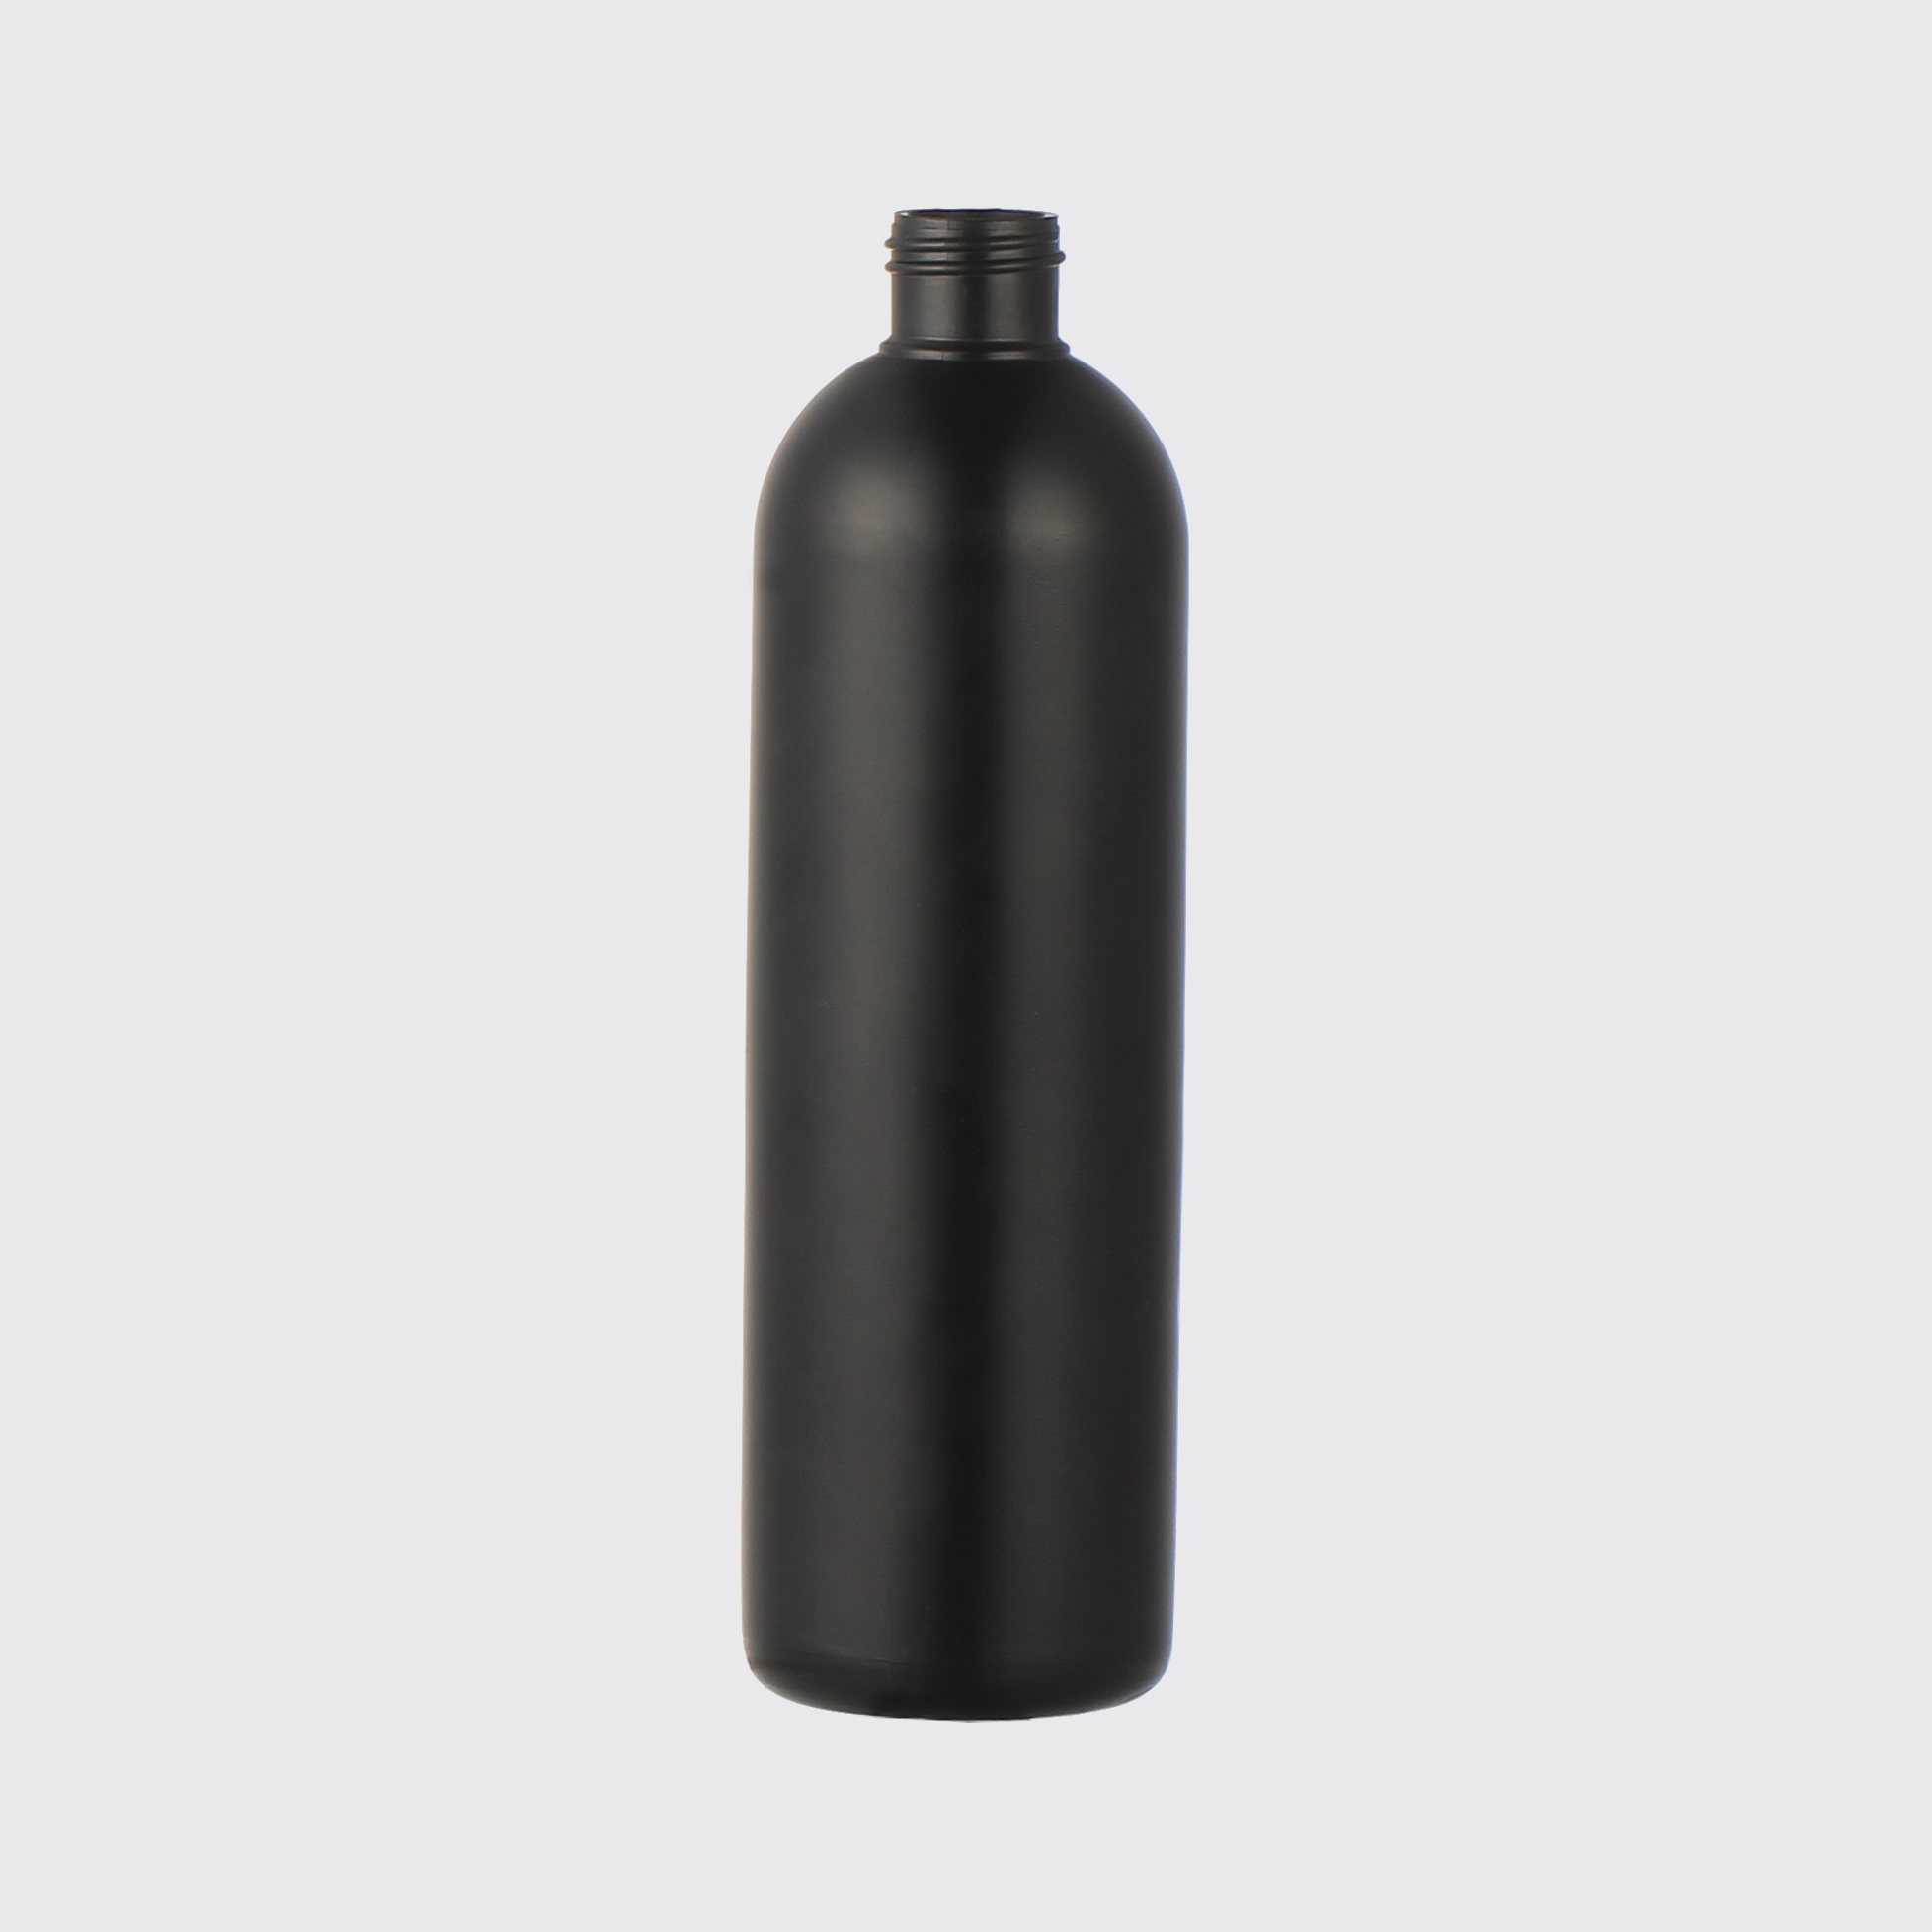 12oz black hdpe boston round bottle with trigger pump spray cap